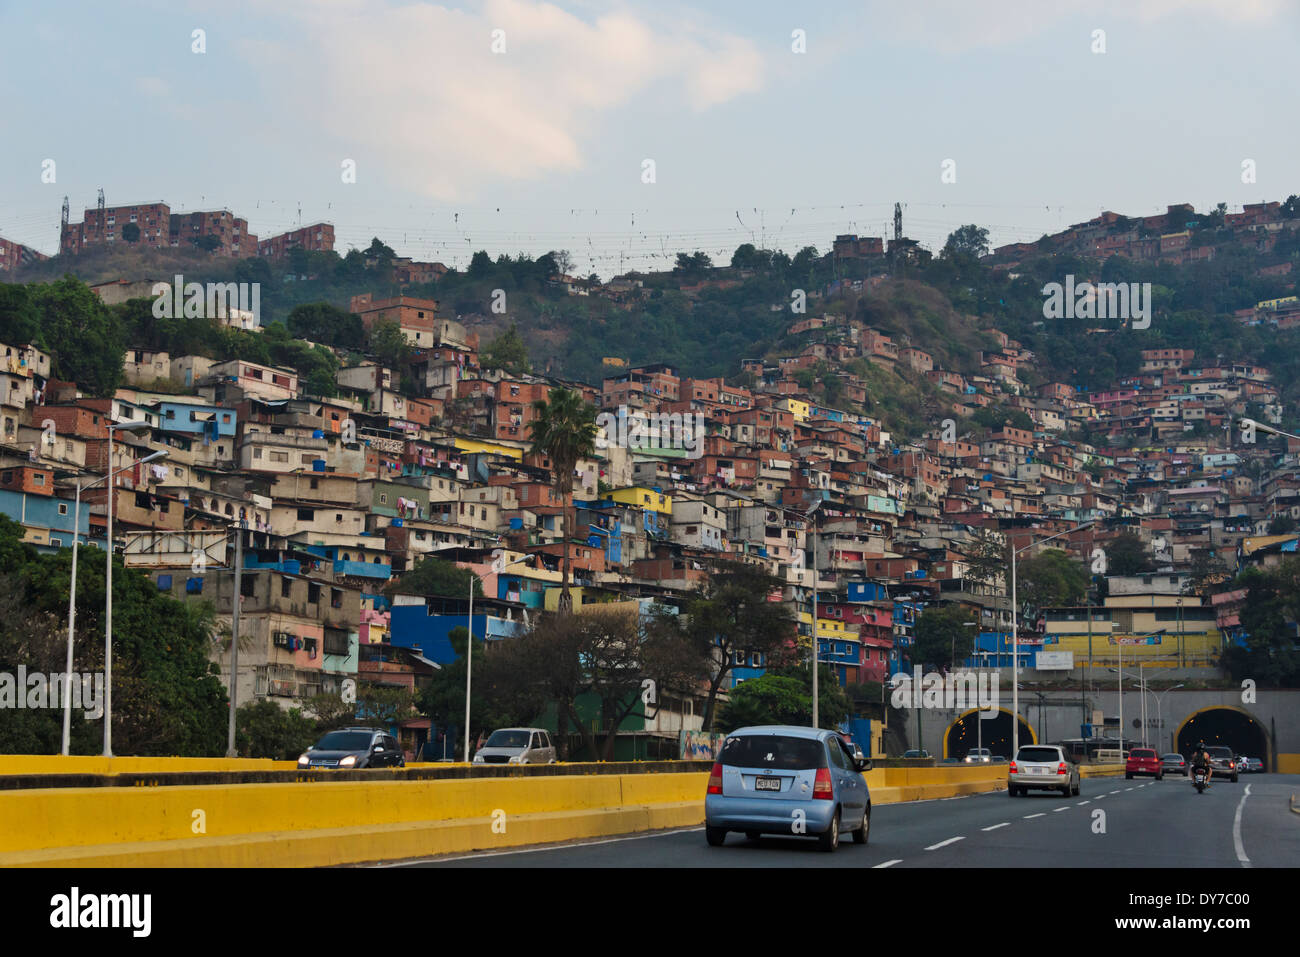 Barrios, bidonvilles de Caracas sur la colline, Caracas, Venezuela Banque D'Images